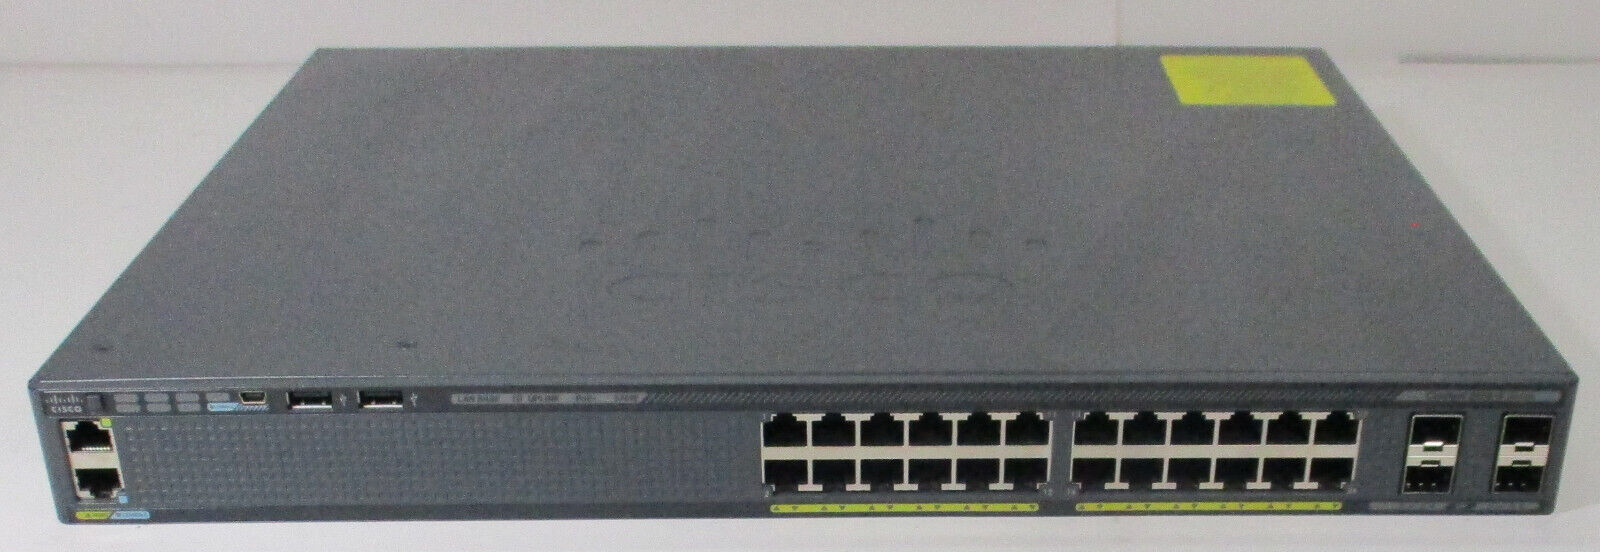 Cisco WS-C2960X-24PS-L 24 Port PoE Network Switch & Stack Module